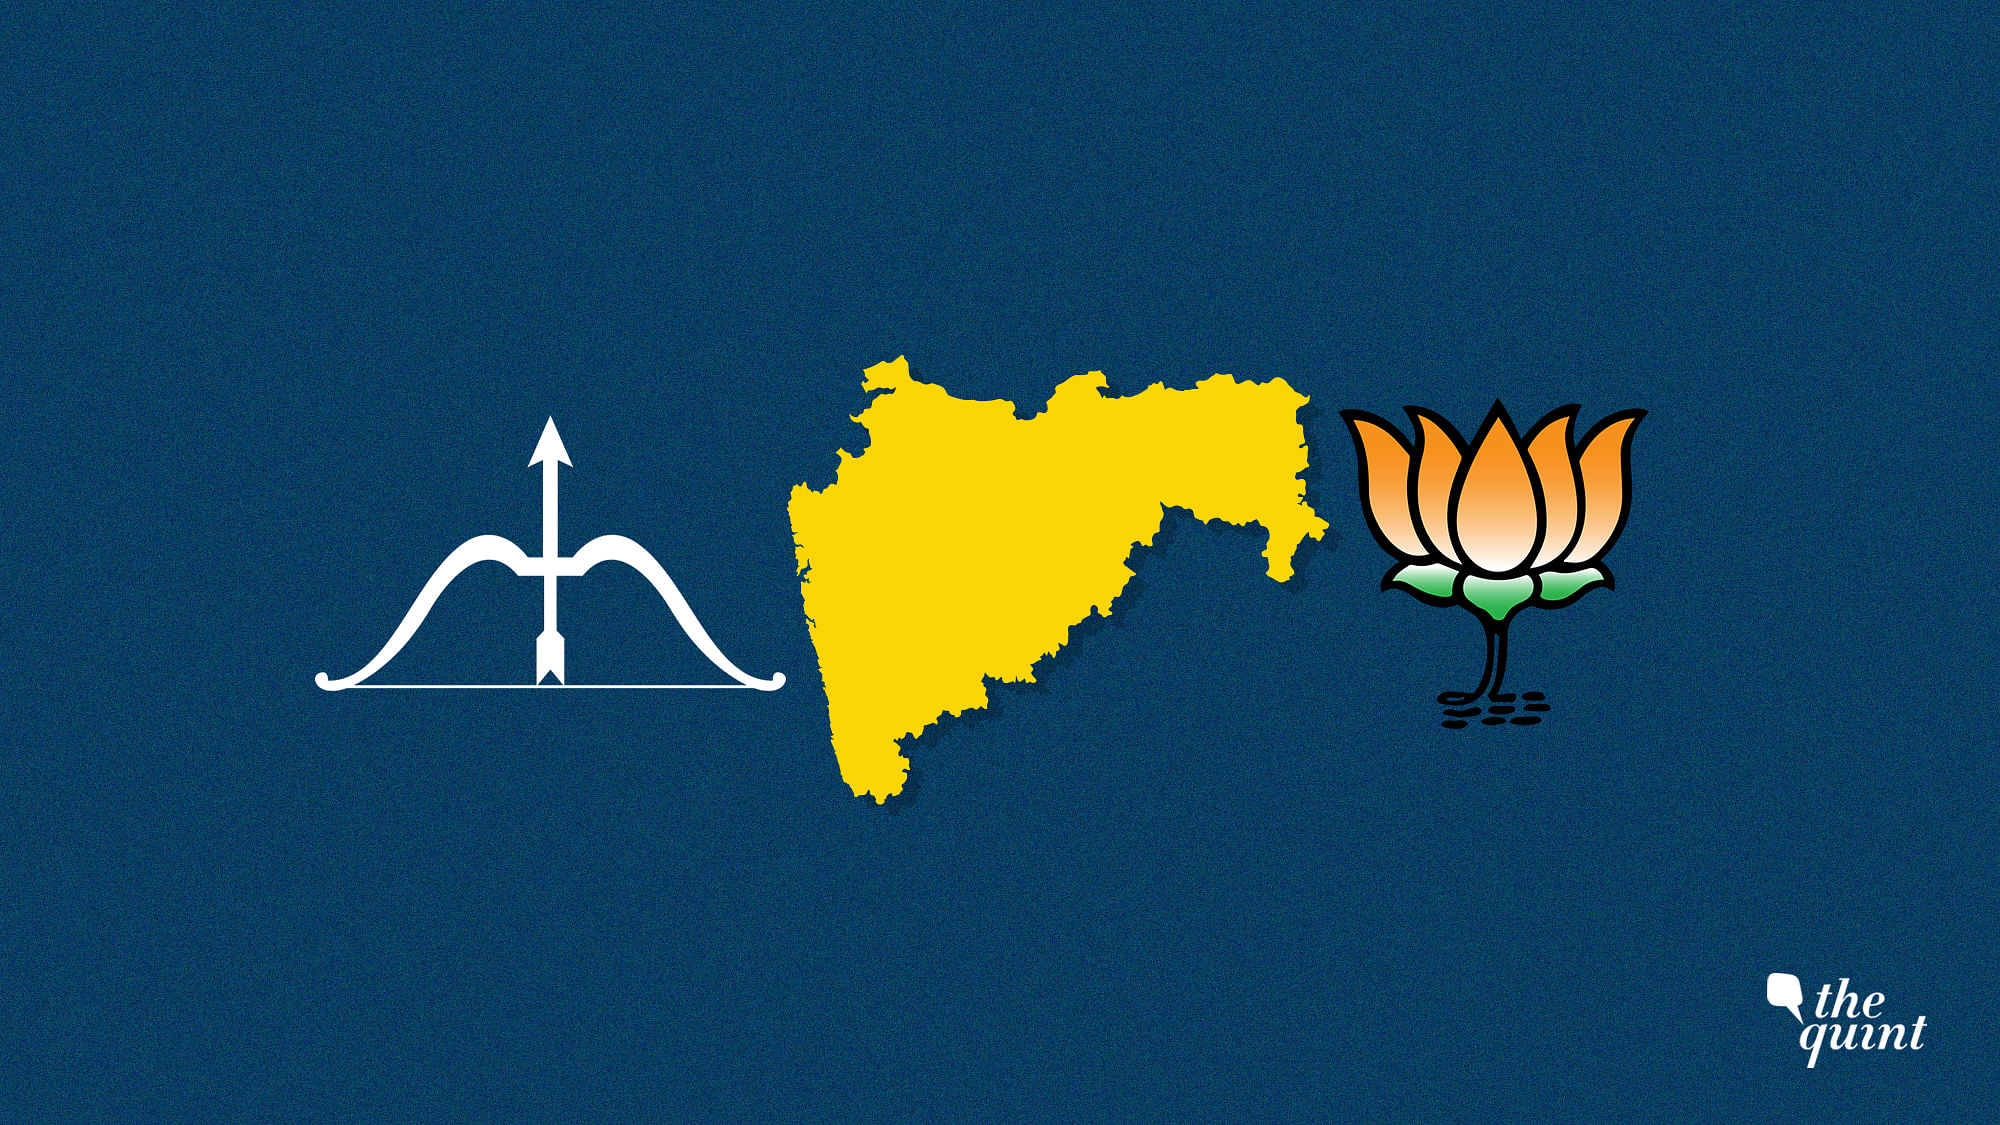 Image of Maharashtra map and Shiv Sena symbol (L) and BJP symbol (R) used for representational purposes.